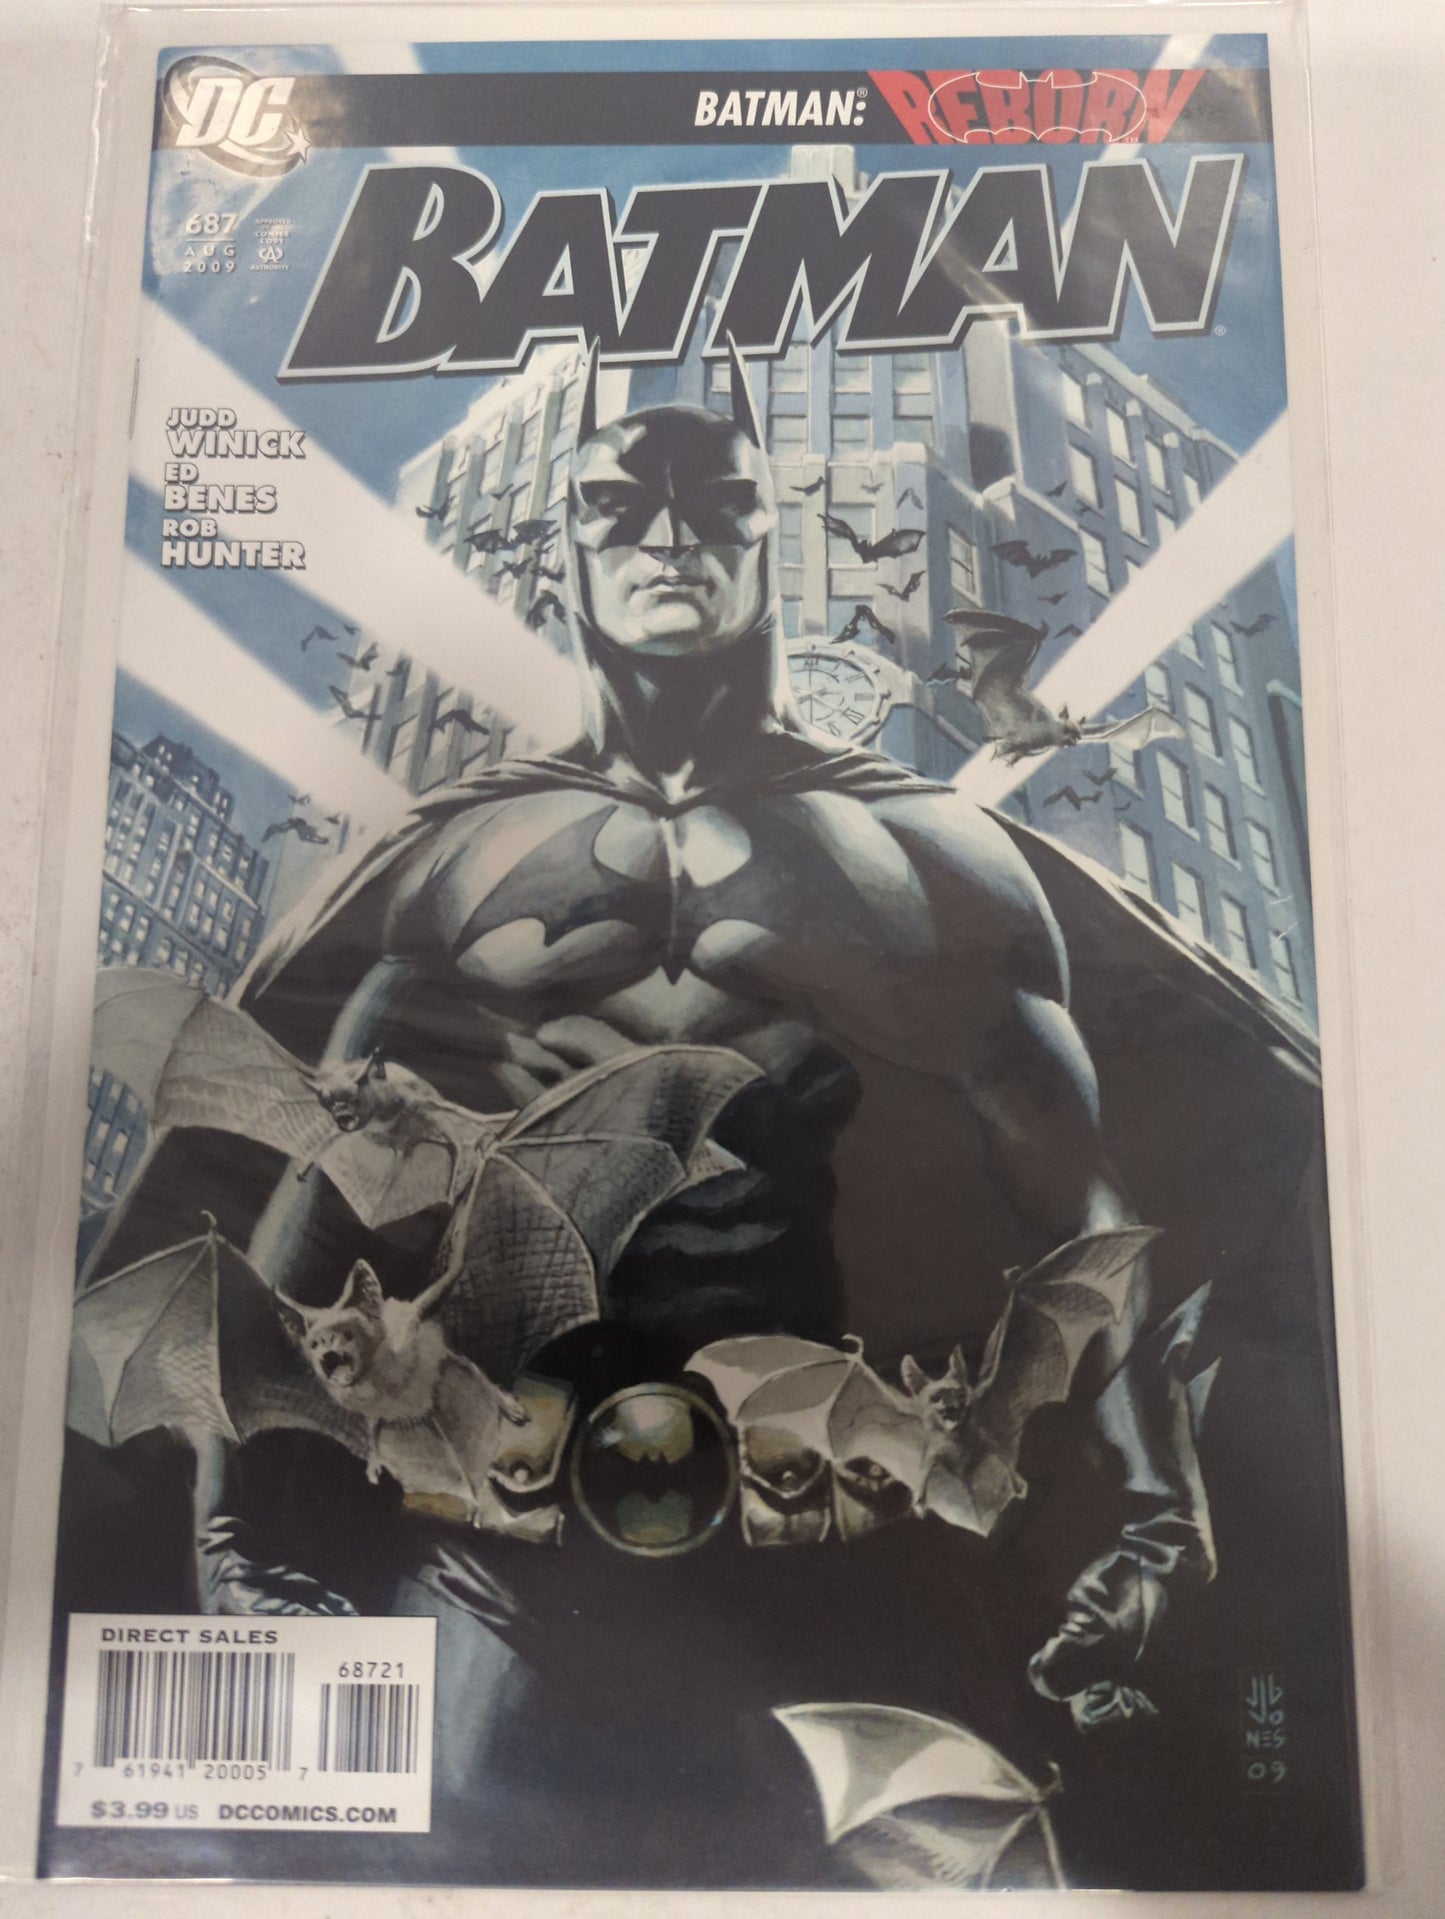 Batman #687